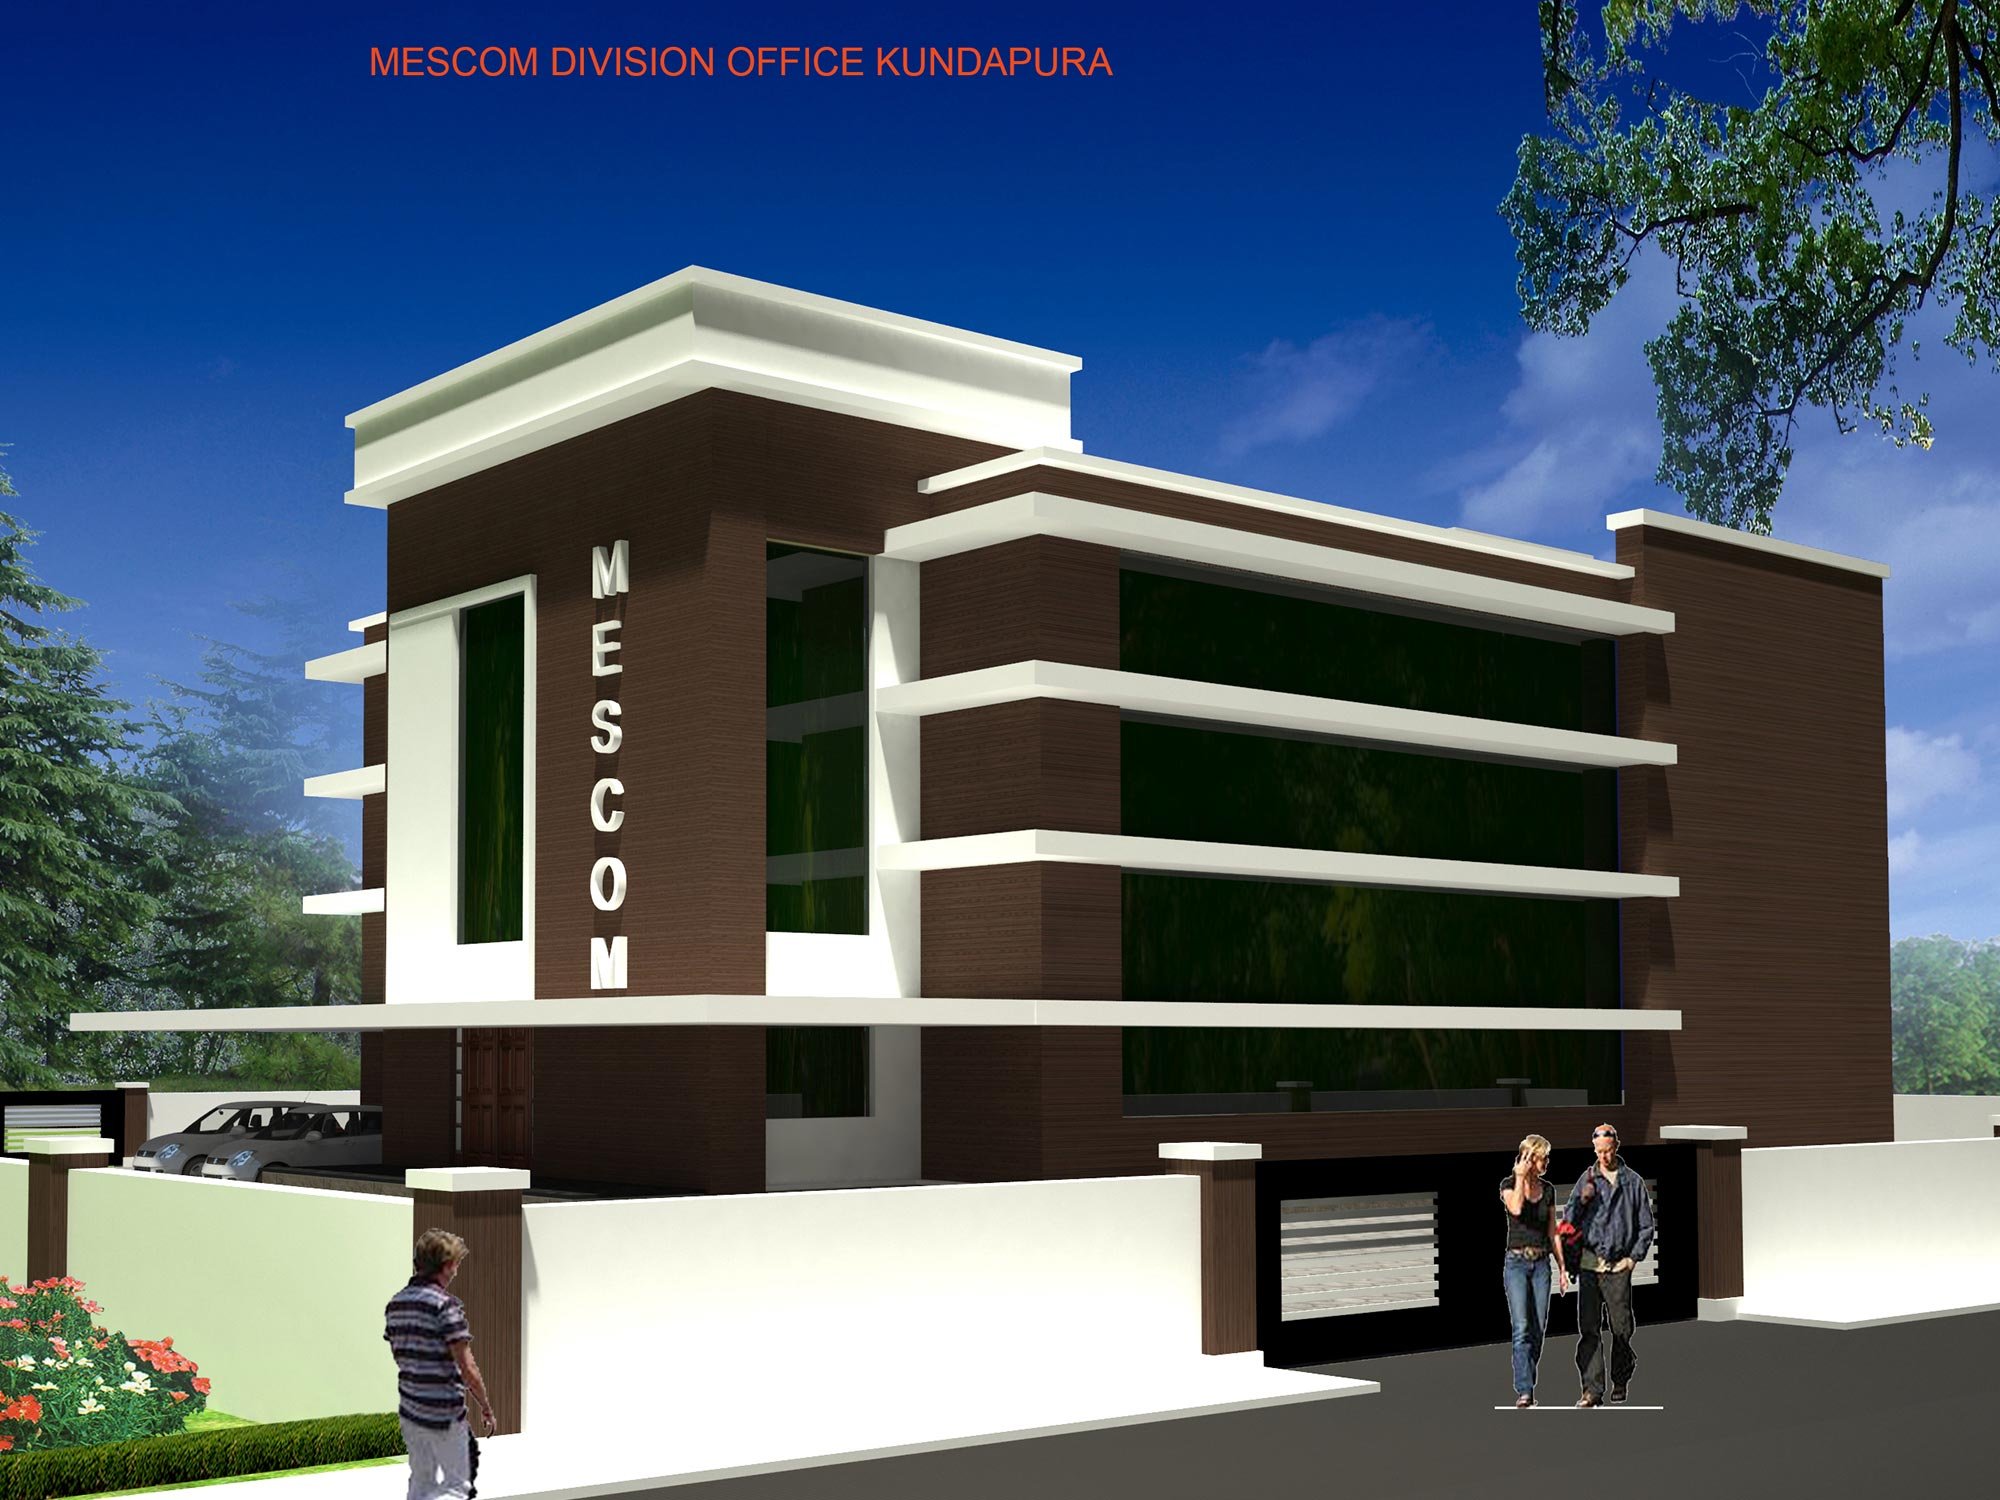 Mescom Division Office Kundapur